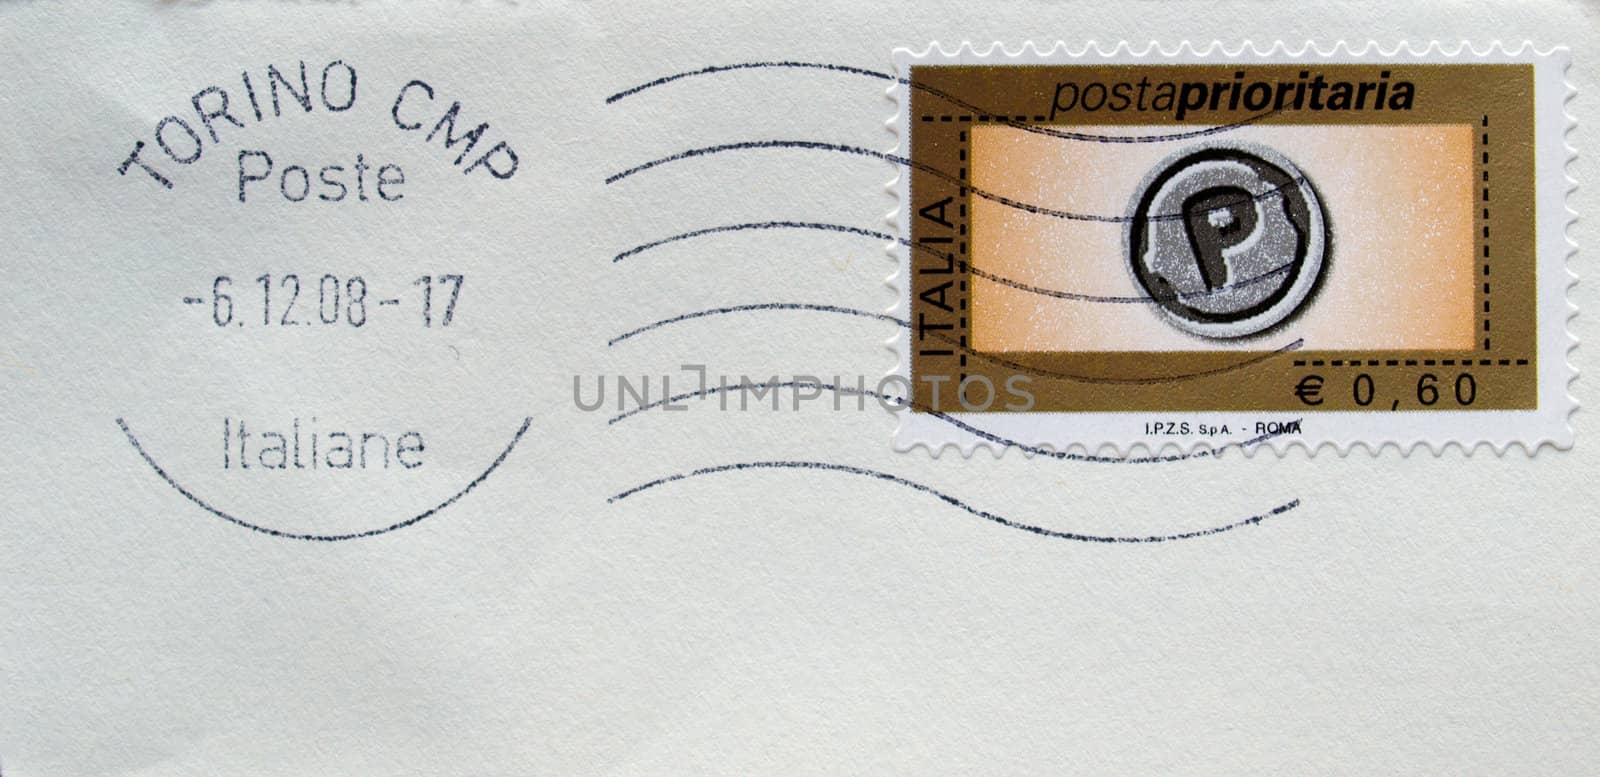 Italian stamp by claudiodivizia